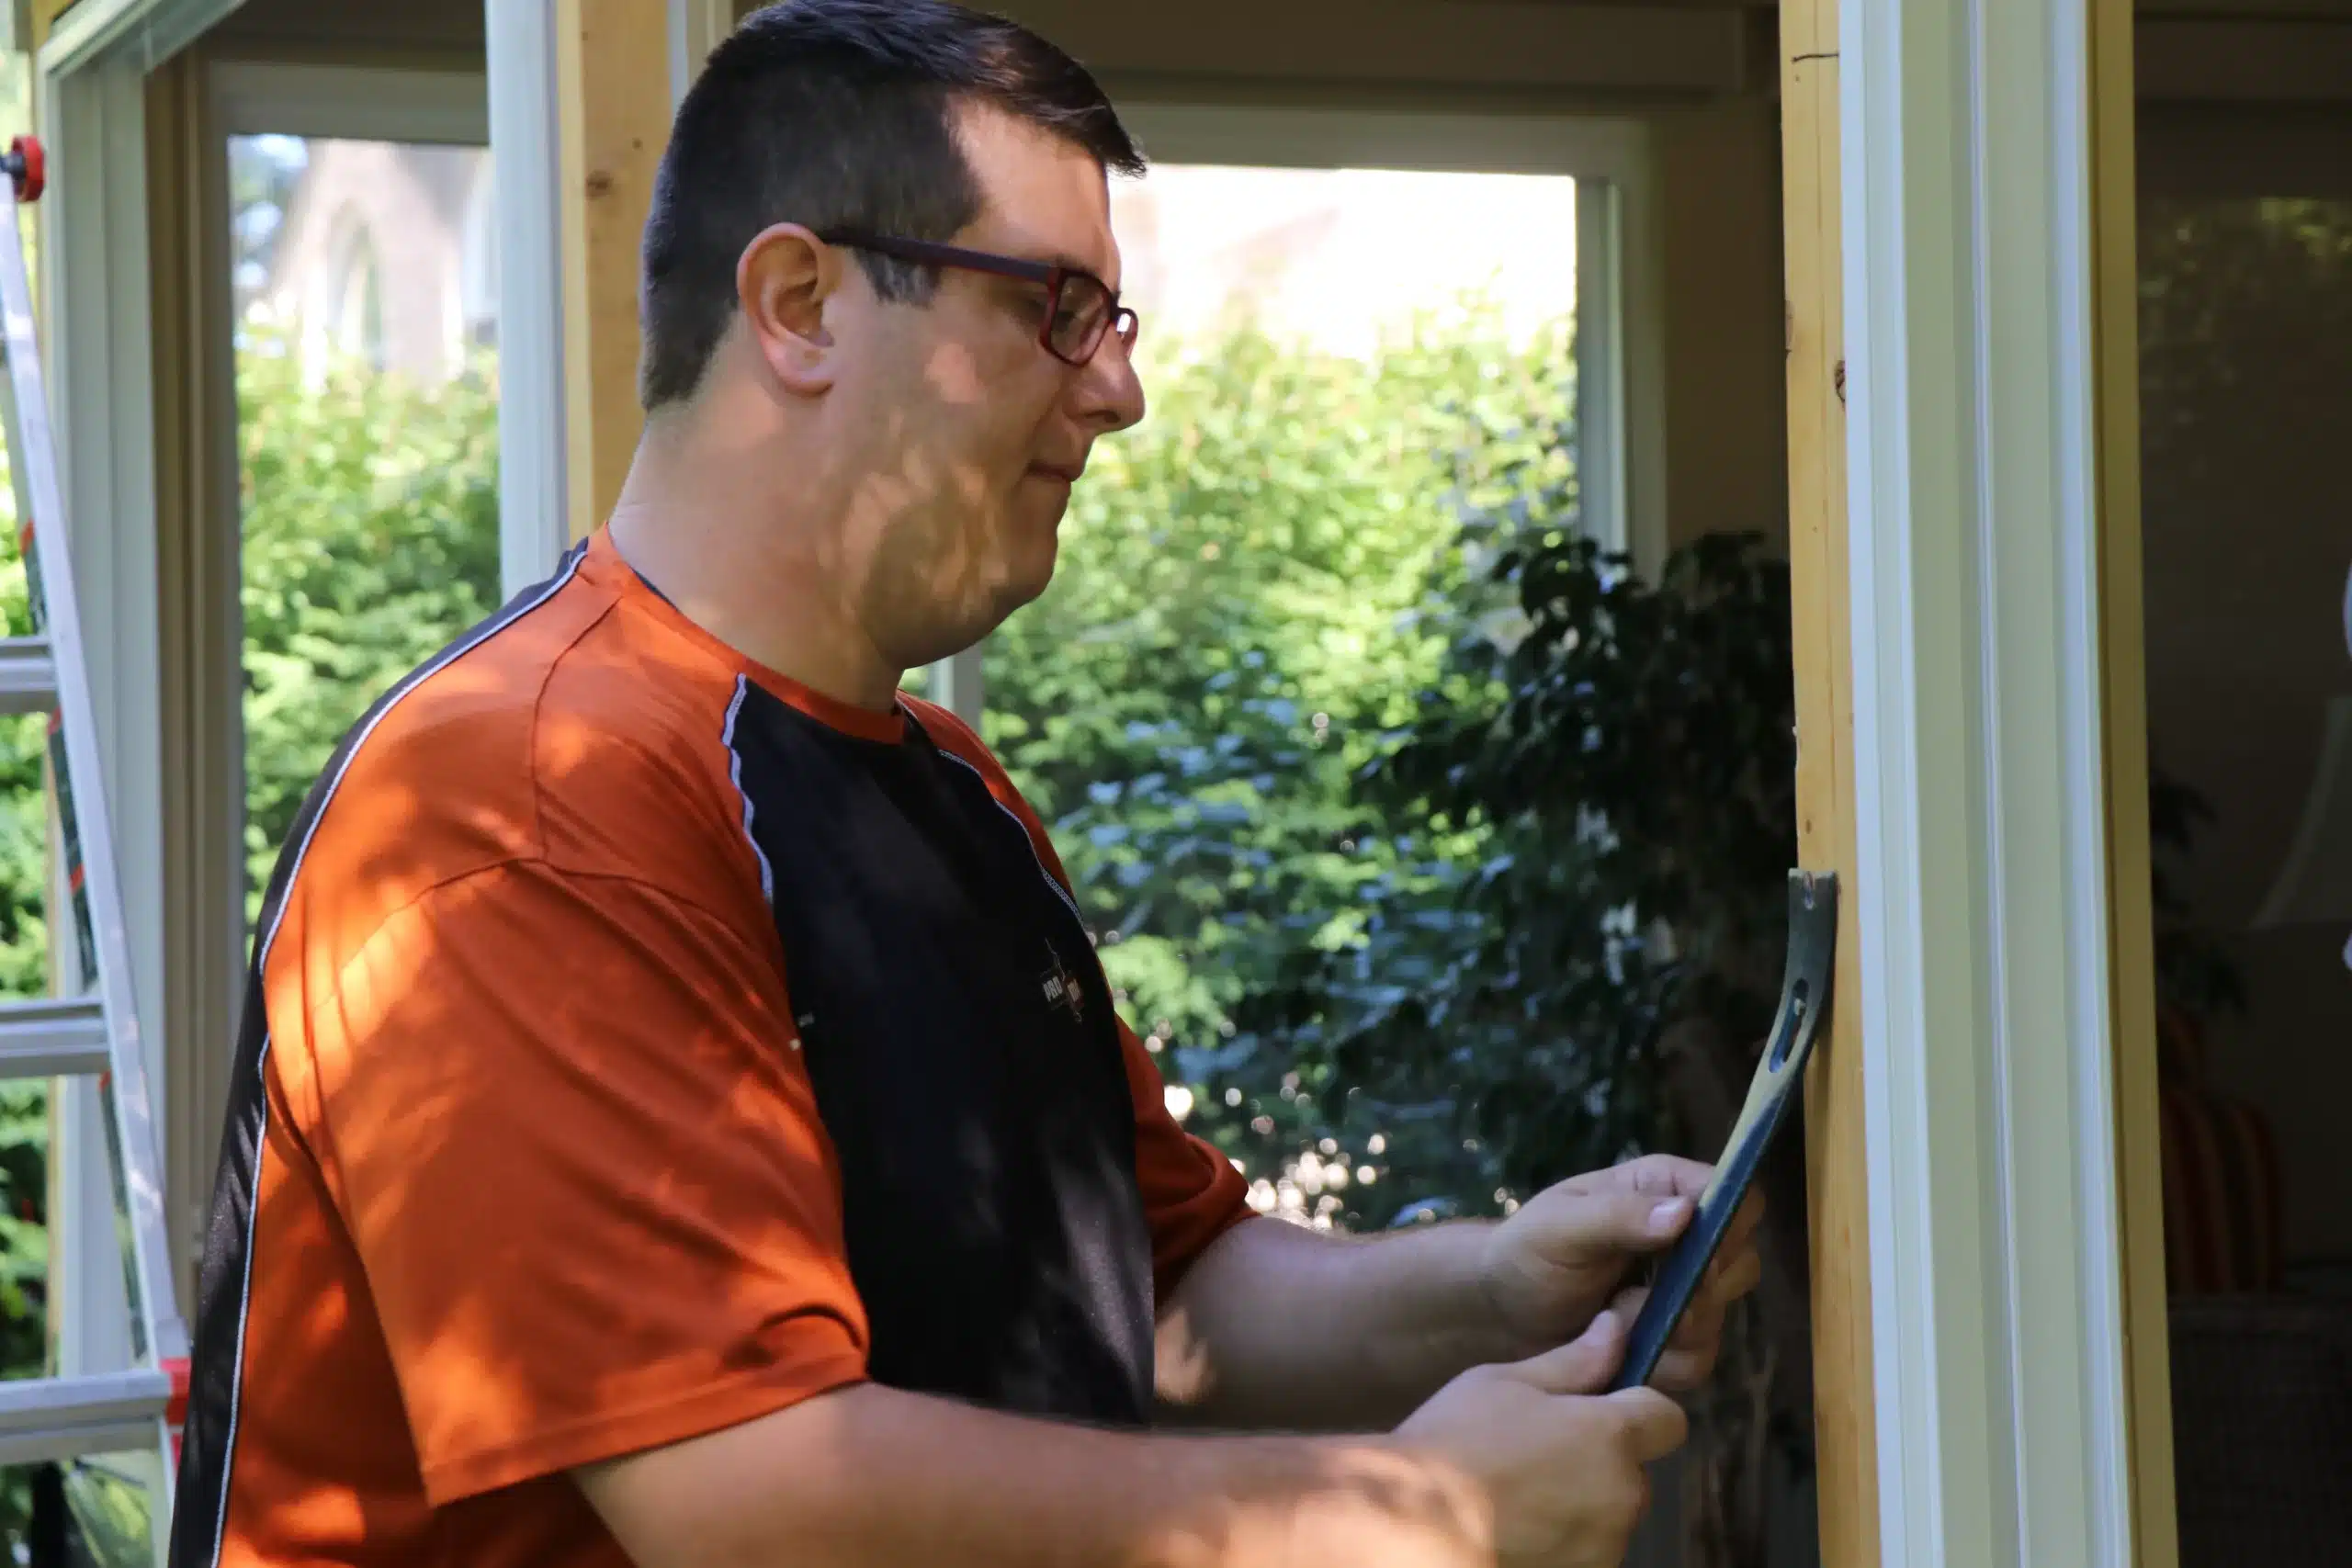 ProMaster craftsman performs a Cincinnati handyman service, wood rot repair.